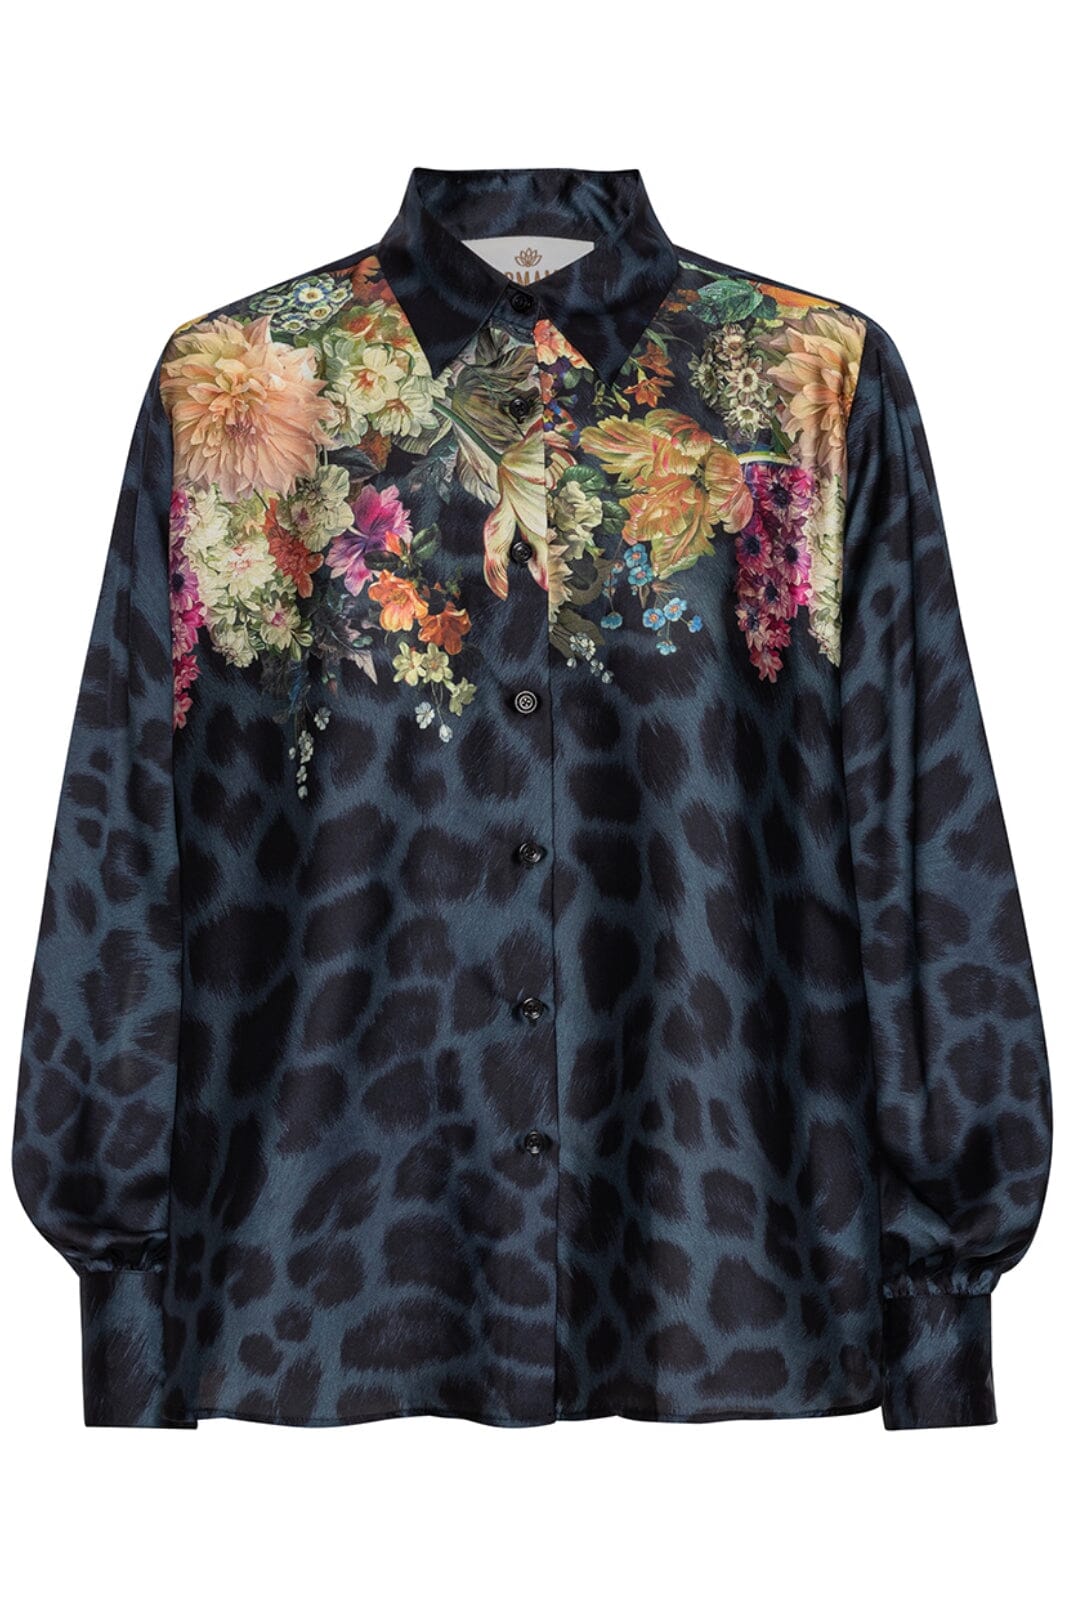 Karmamia - Elle Shirt - Navy Flower Leopard Bluser 